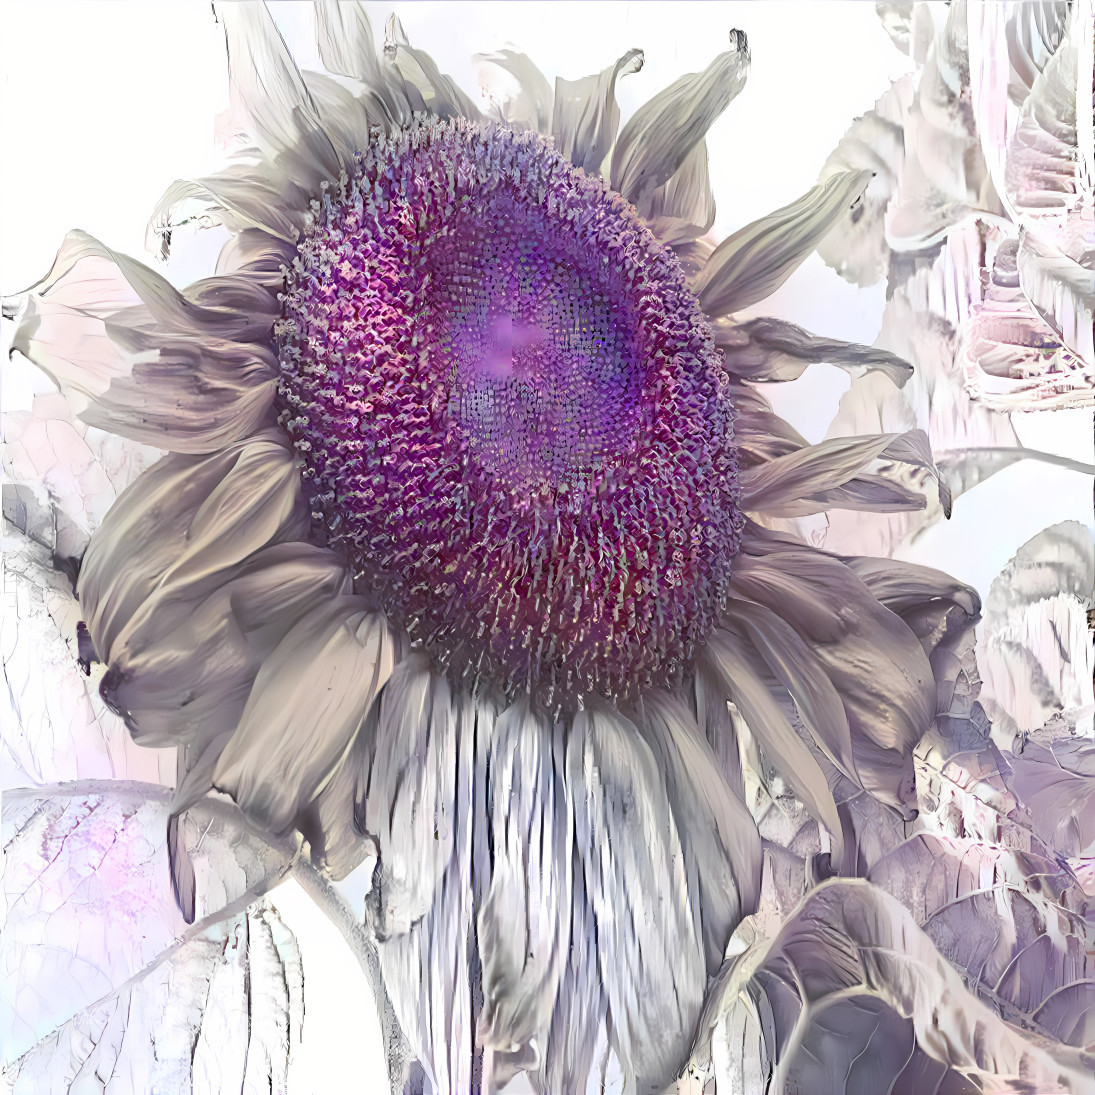 Sunflower, Dandelion, and Plum [an edit]